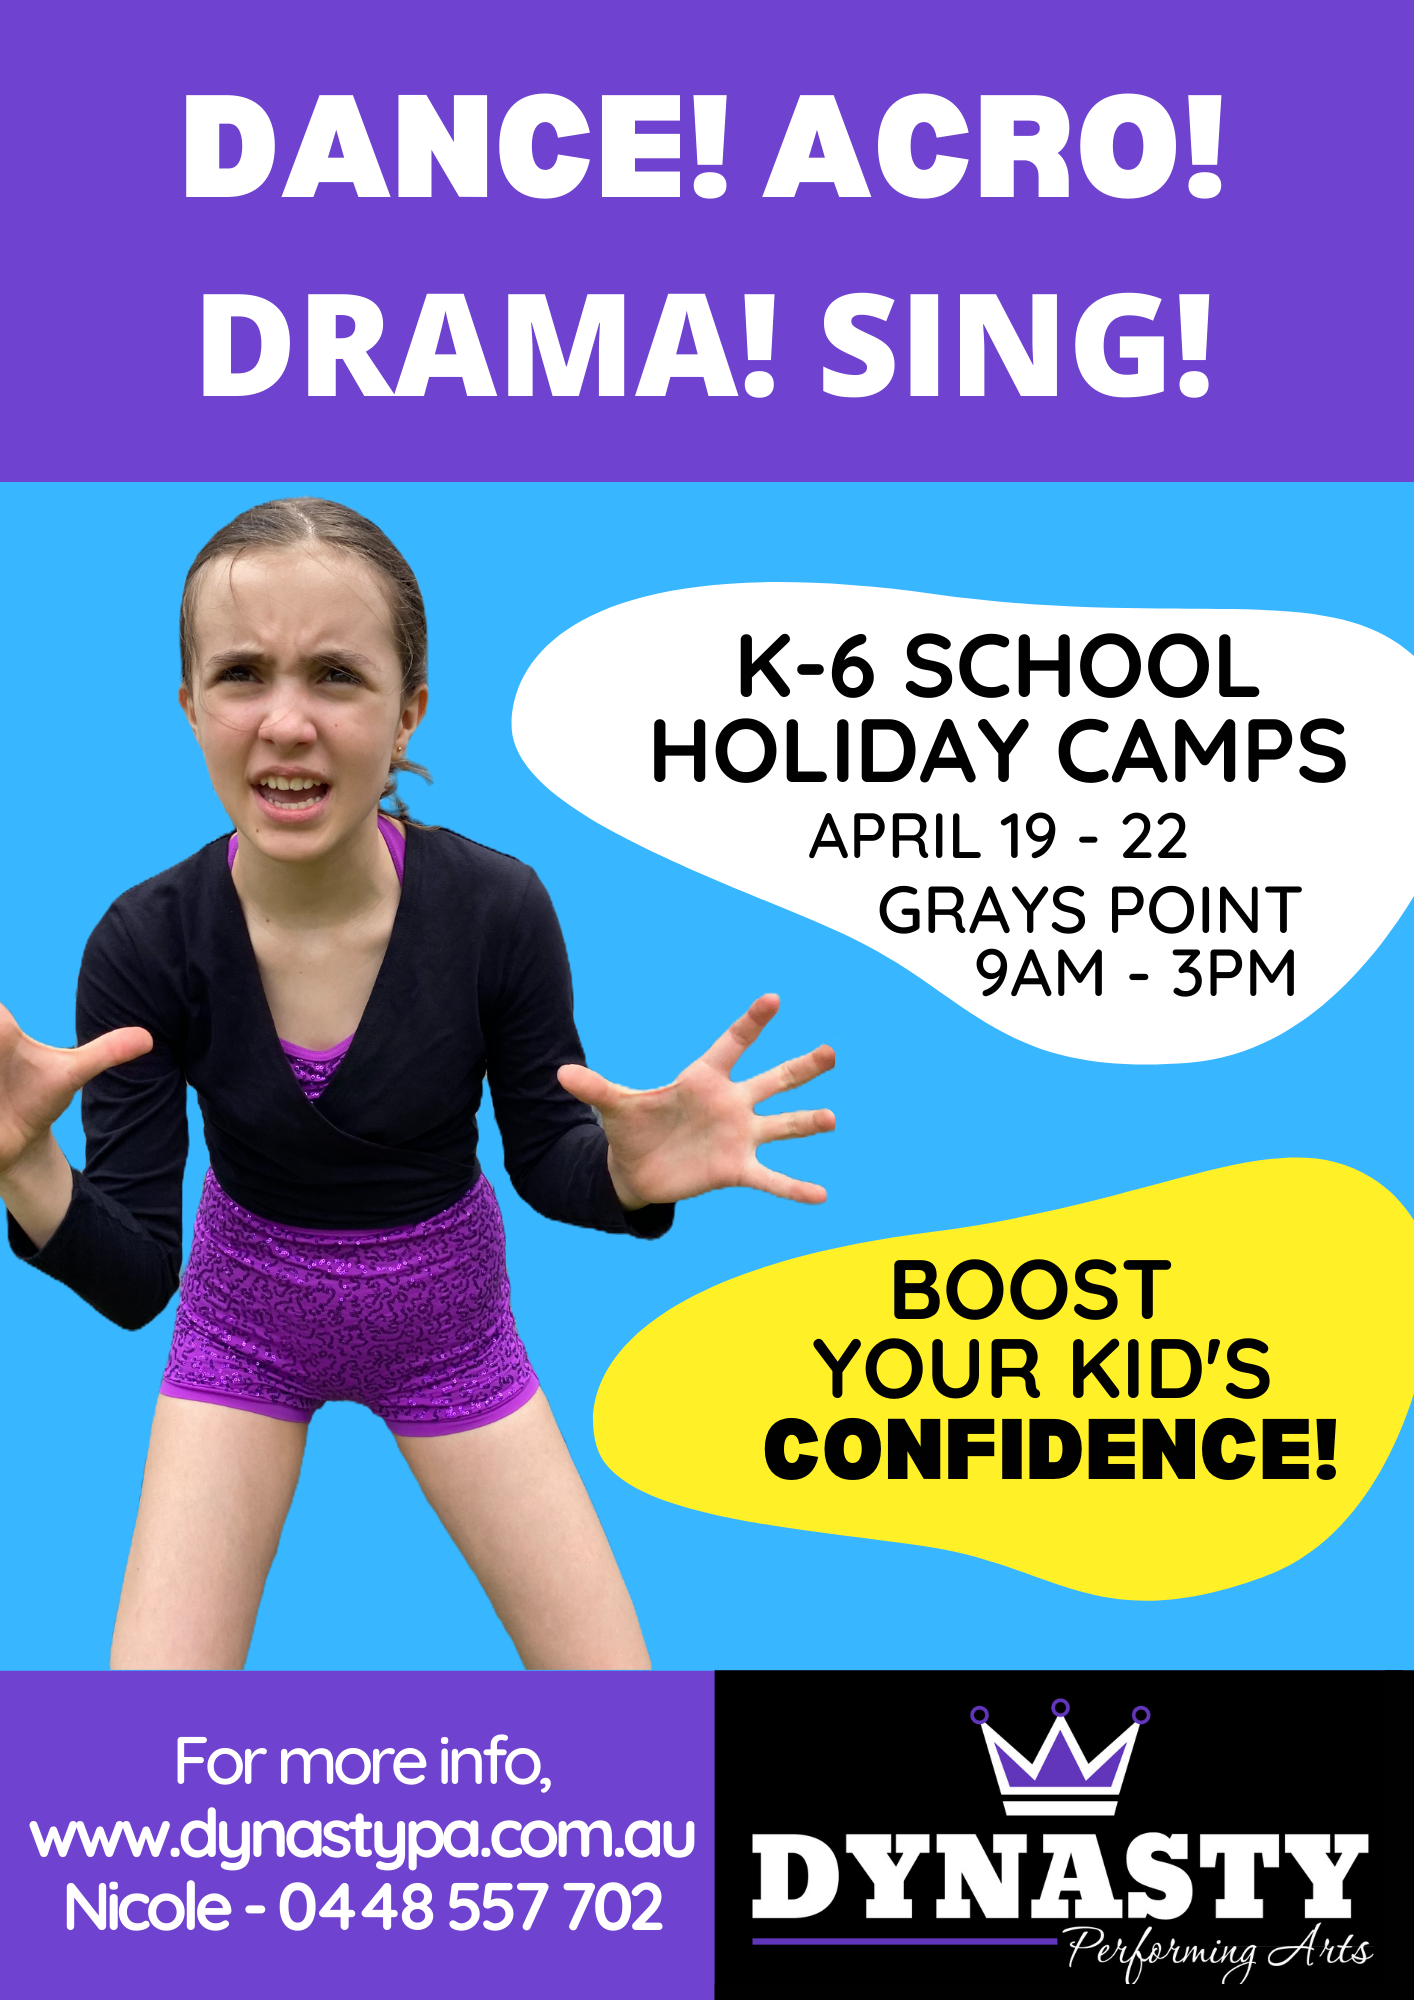 K-6 Holiday Camp! DYNASTY Performing Arts